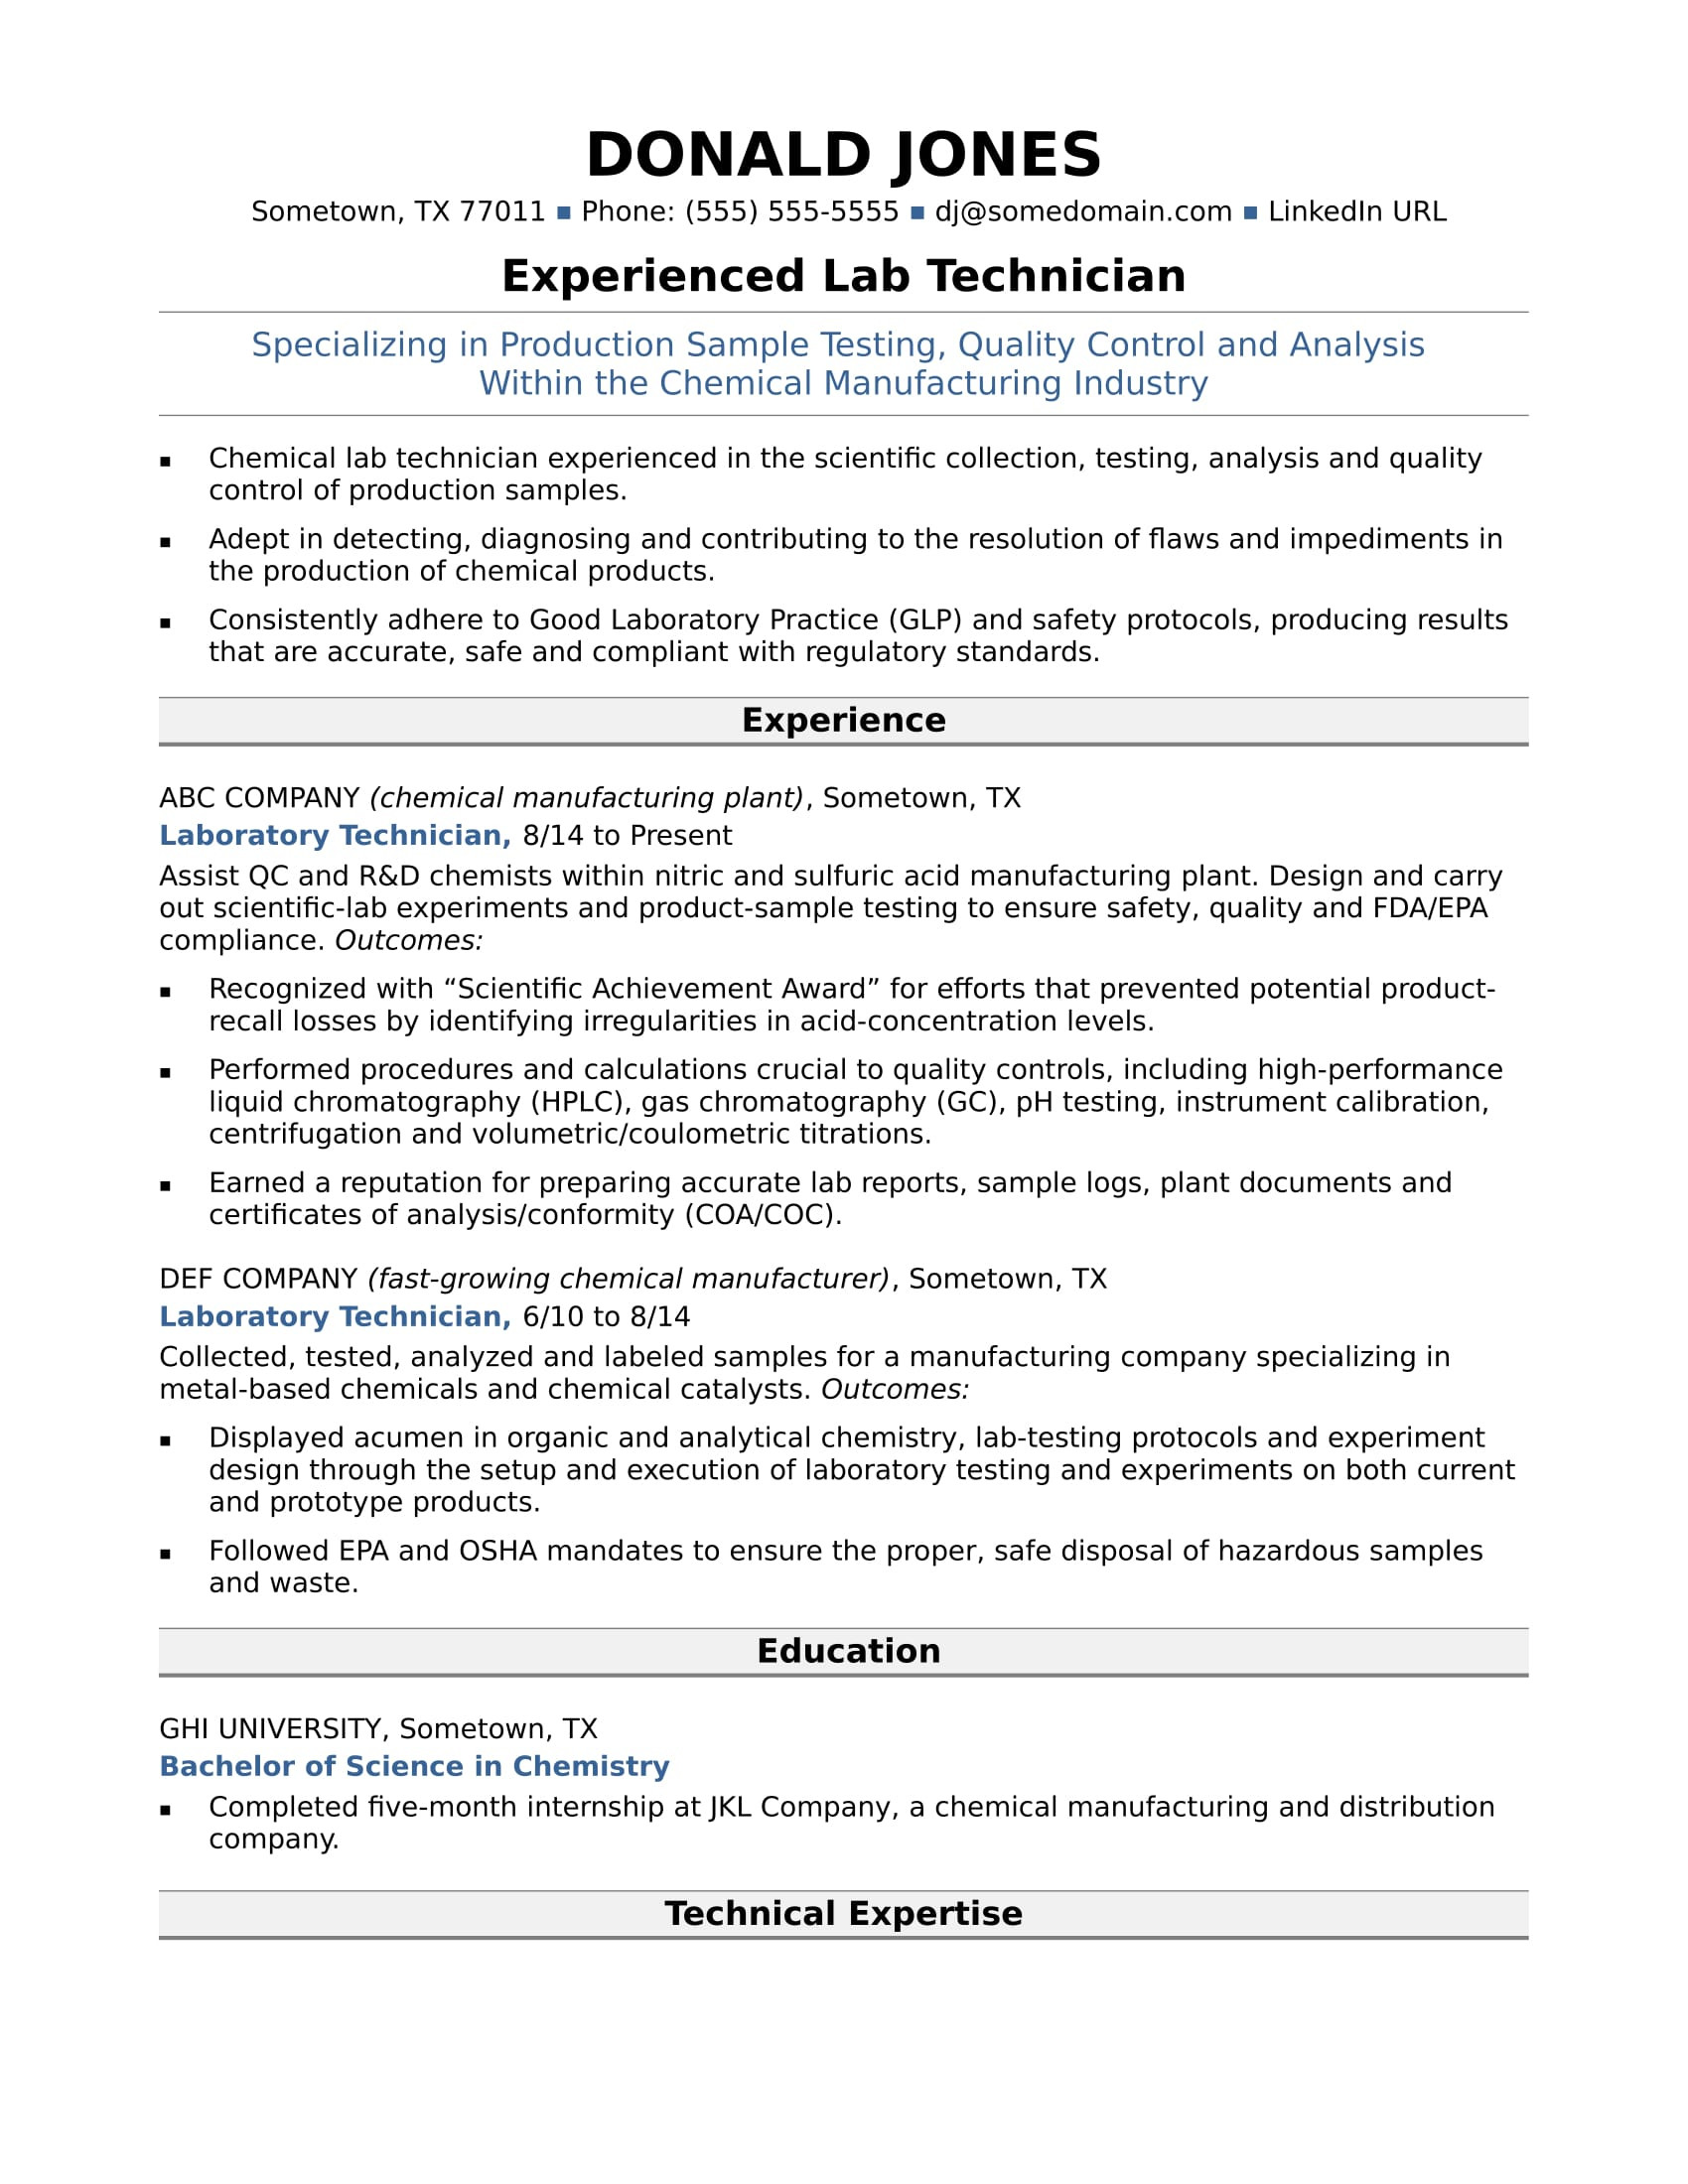 Sample Resume for New Medical Lab Technician Senior Laboratory Technician Resume Sample Monster.com